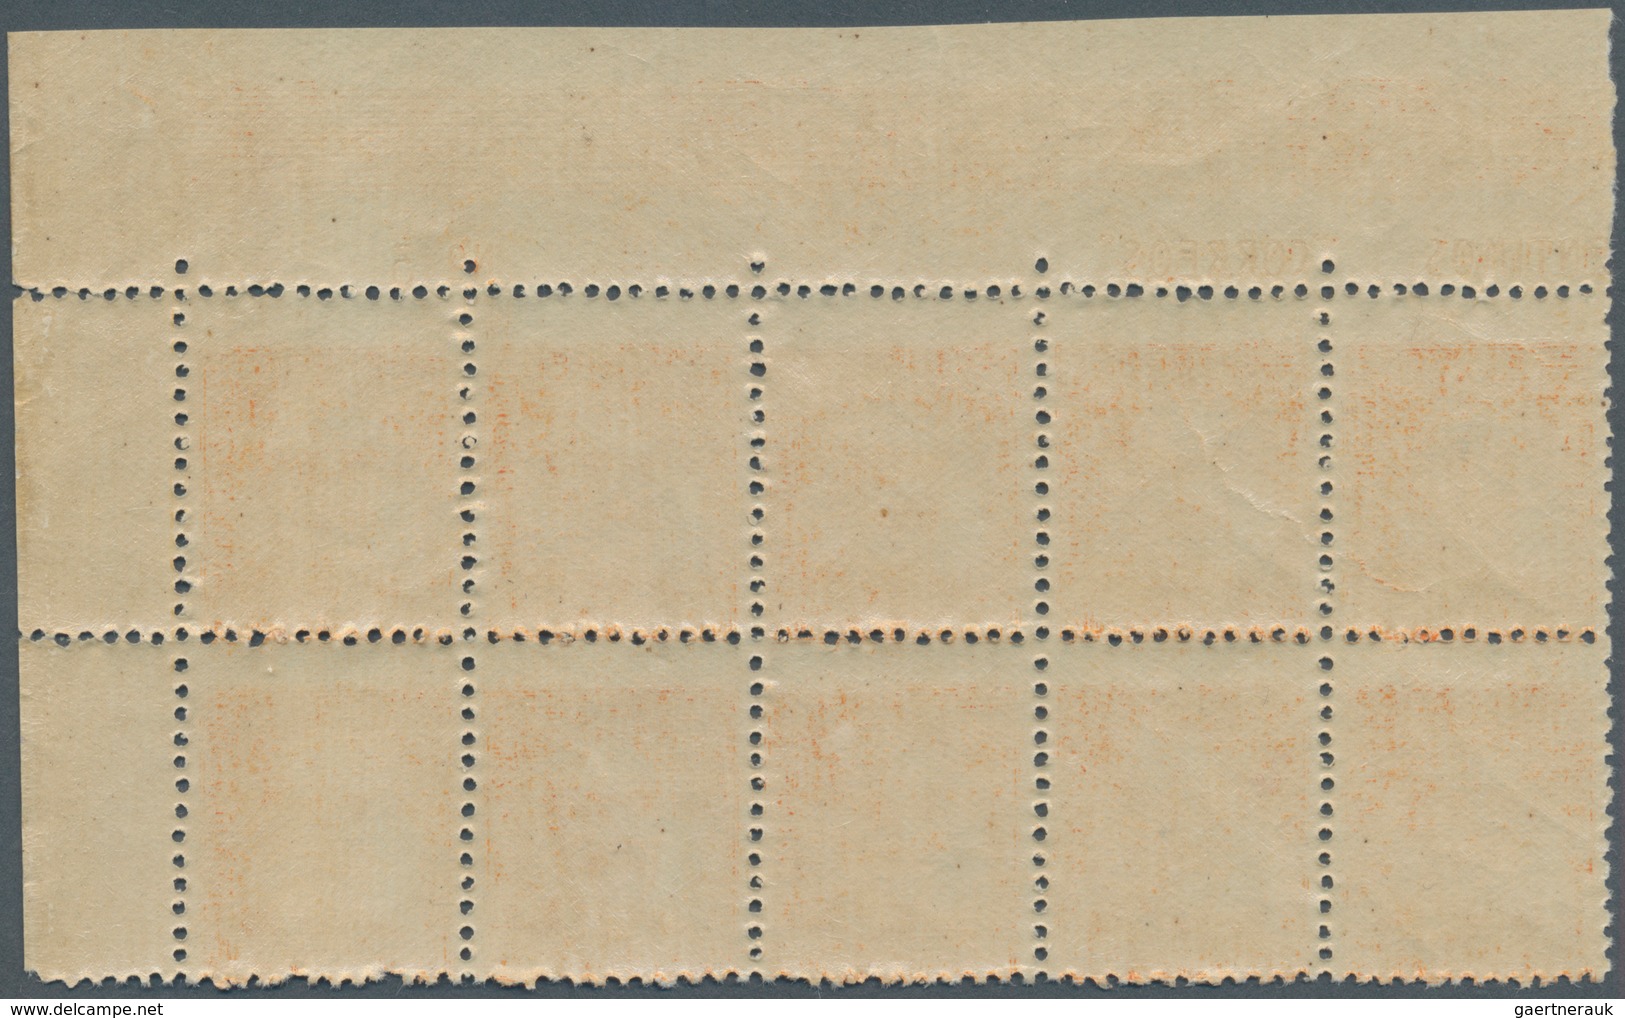 Spanien: 1938, Fermin Salvochea y Alvarez 60c. orange four blocks of ten from upper right corners wi